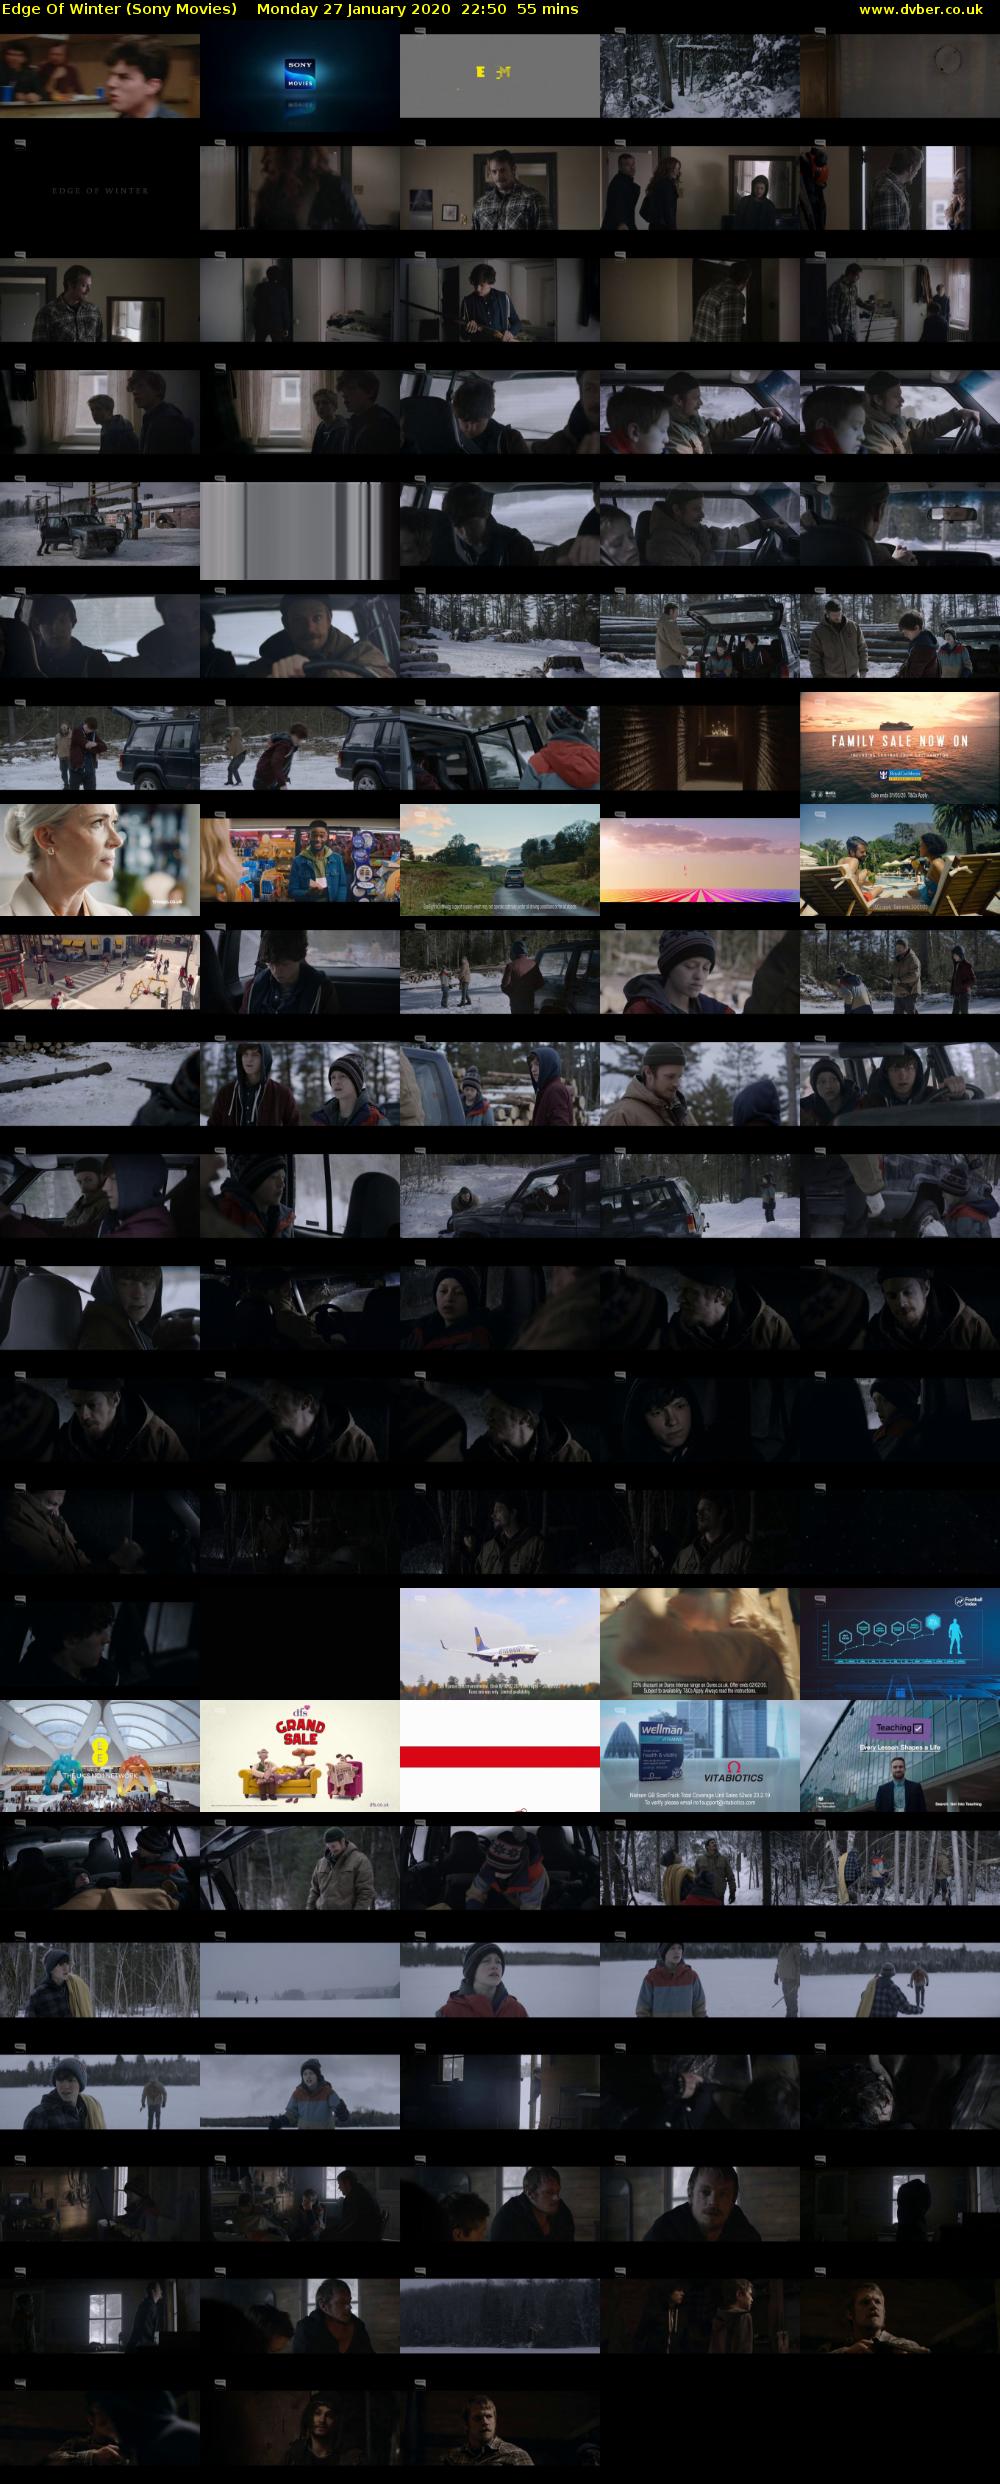 Edge Of Winter (Sony Movies) Monday 27 January 2020 22:50 - 23:45